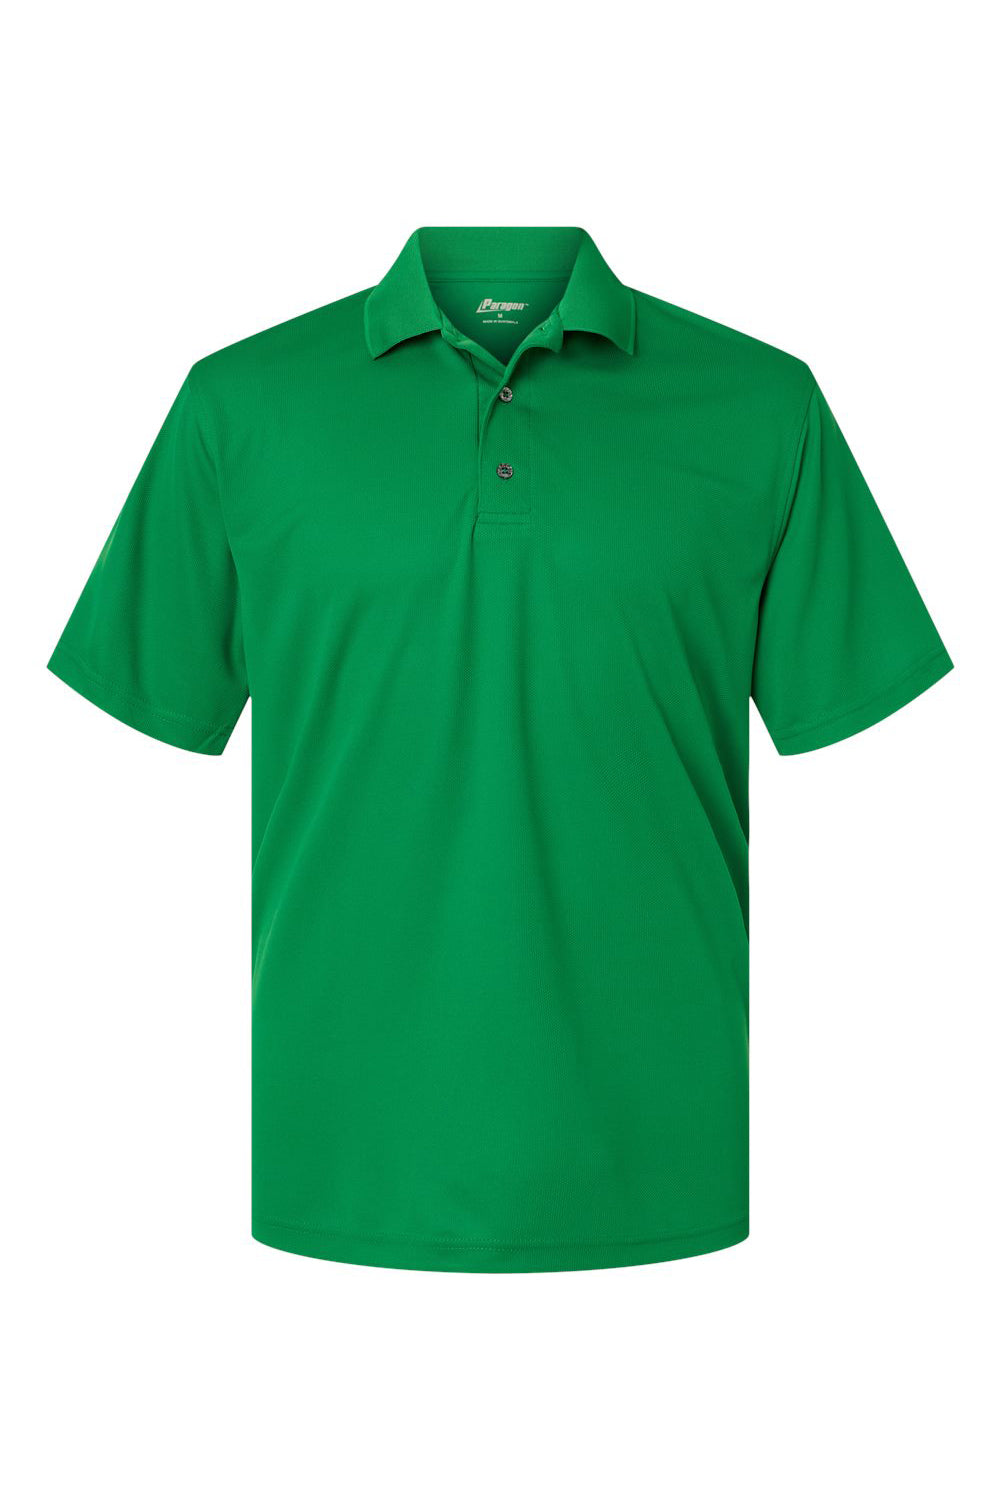 Paragon 100 Mens Saratoga Performance Mini Mesh Short Sleeve Polo Shirt Kelly Green Flat Front